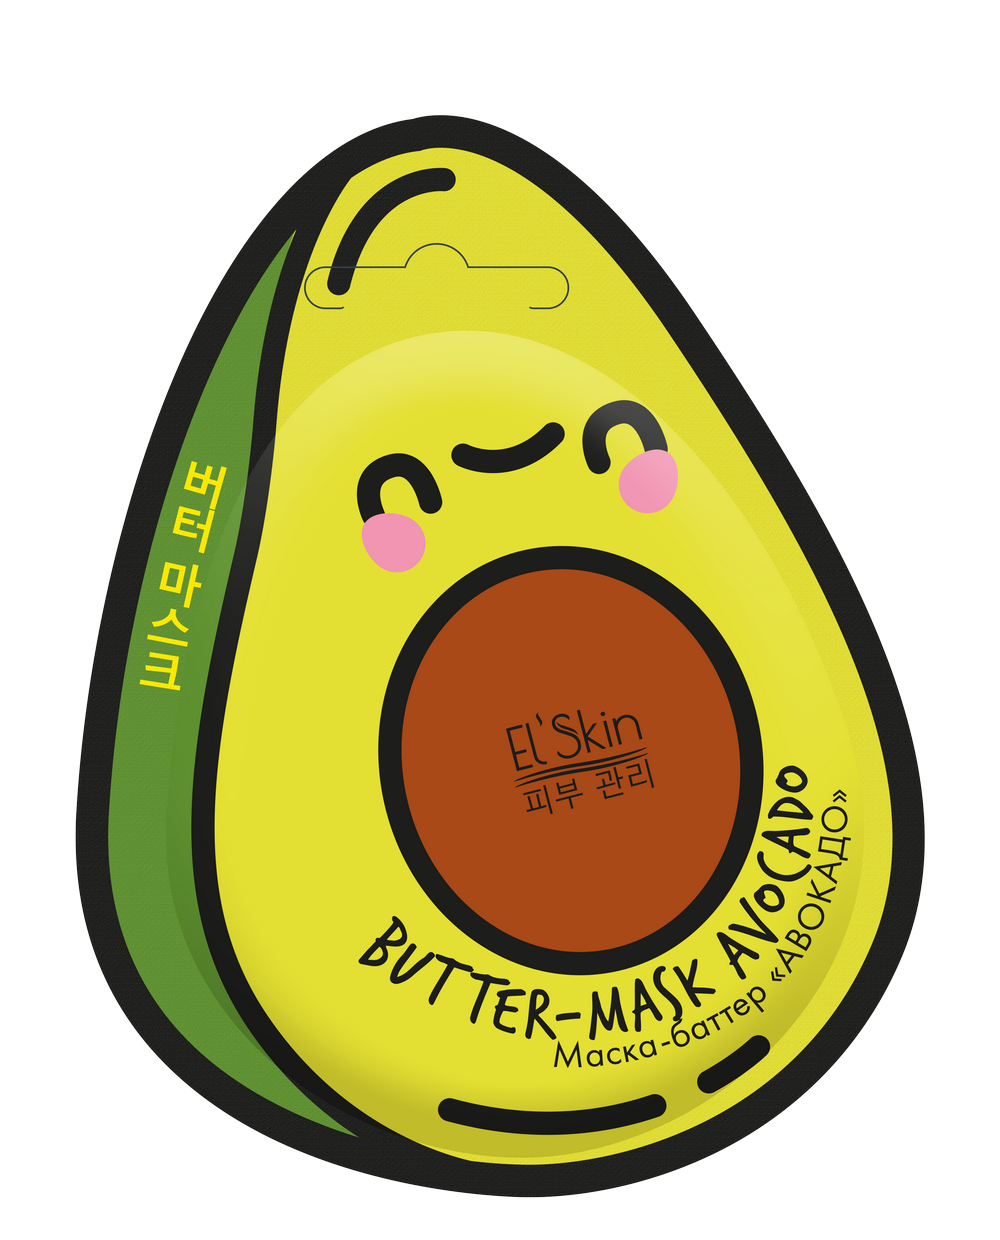 El skin маска. El-Skin маска-баттер "авокадо". Маска баттер Элскин авокадо для лица10г. Маска баттер Элскин 10г. El'Skin Multifood маска-баттер авокадо.